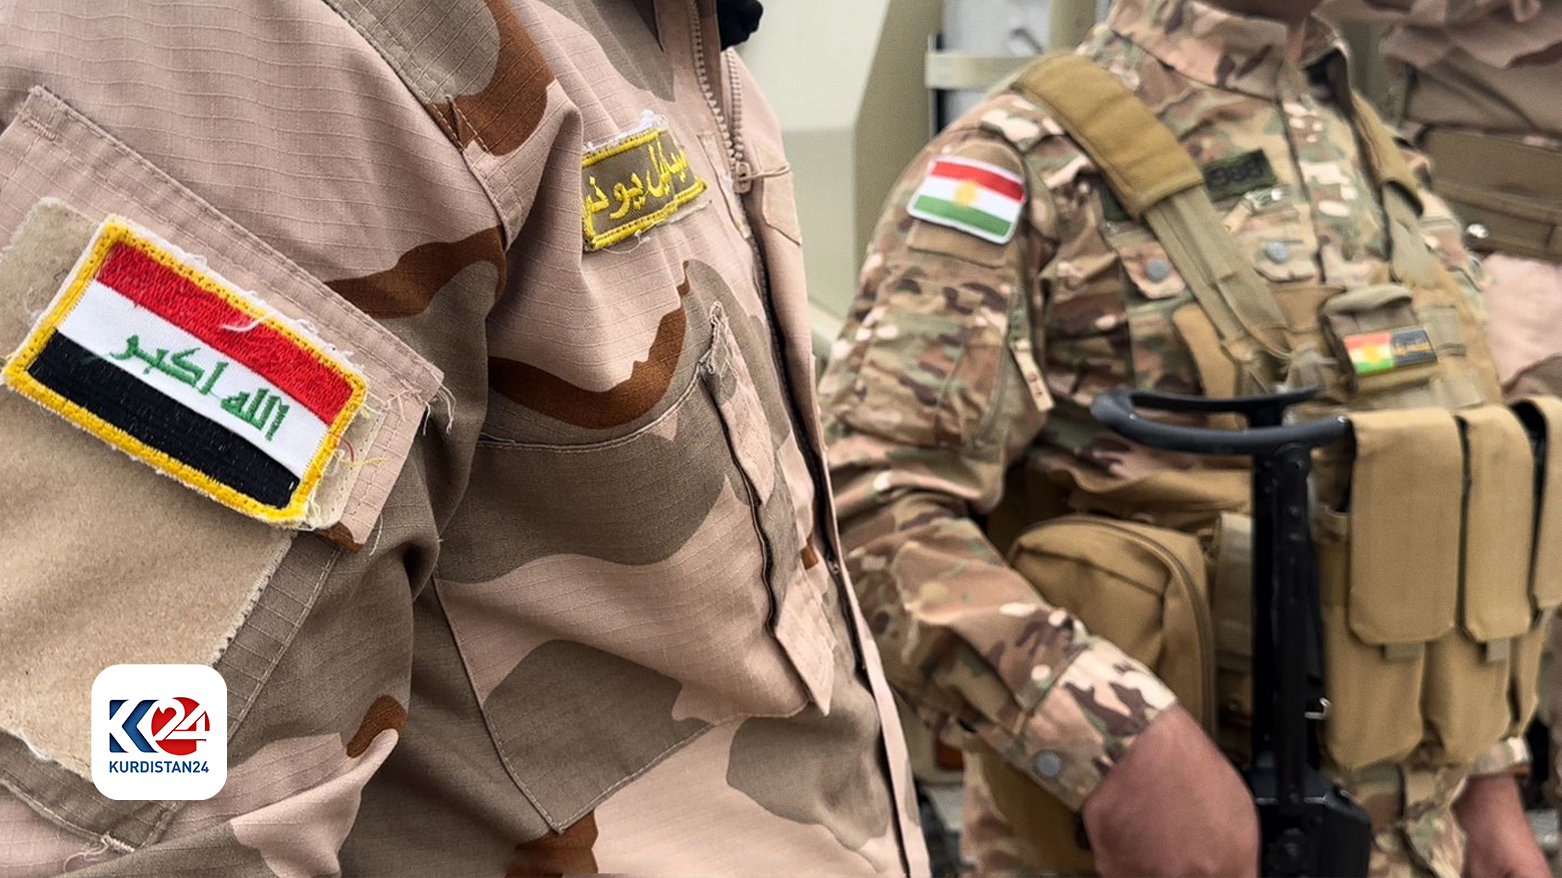 Security gap between Peshmerga Iraqi Army blamed for rise in attacks